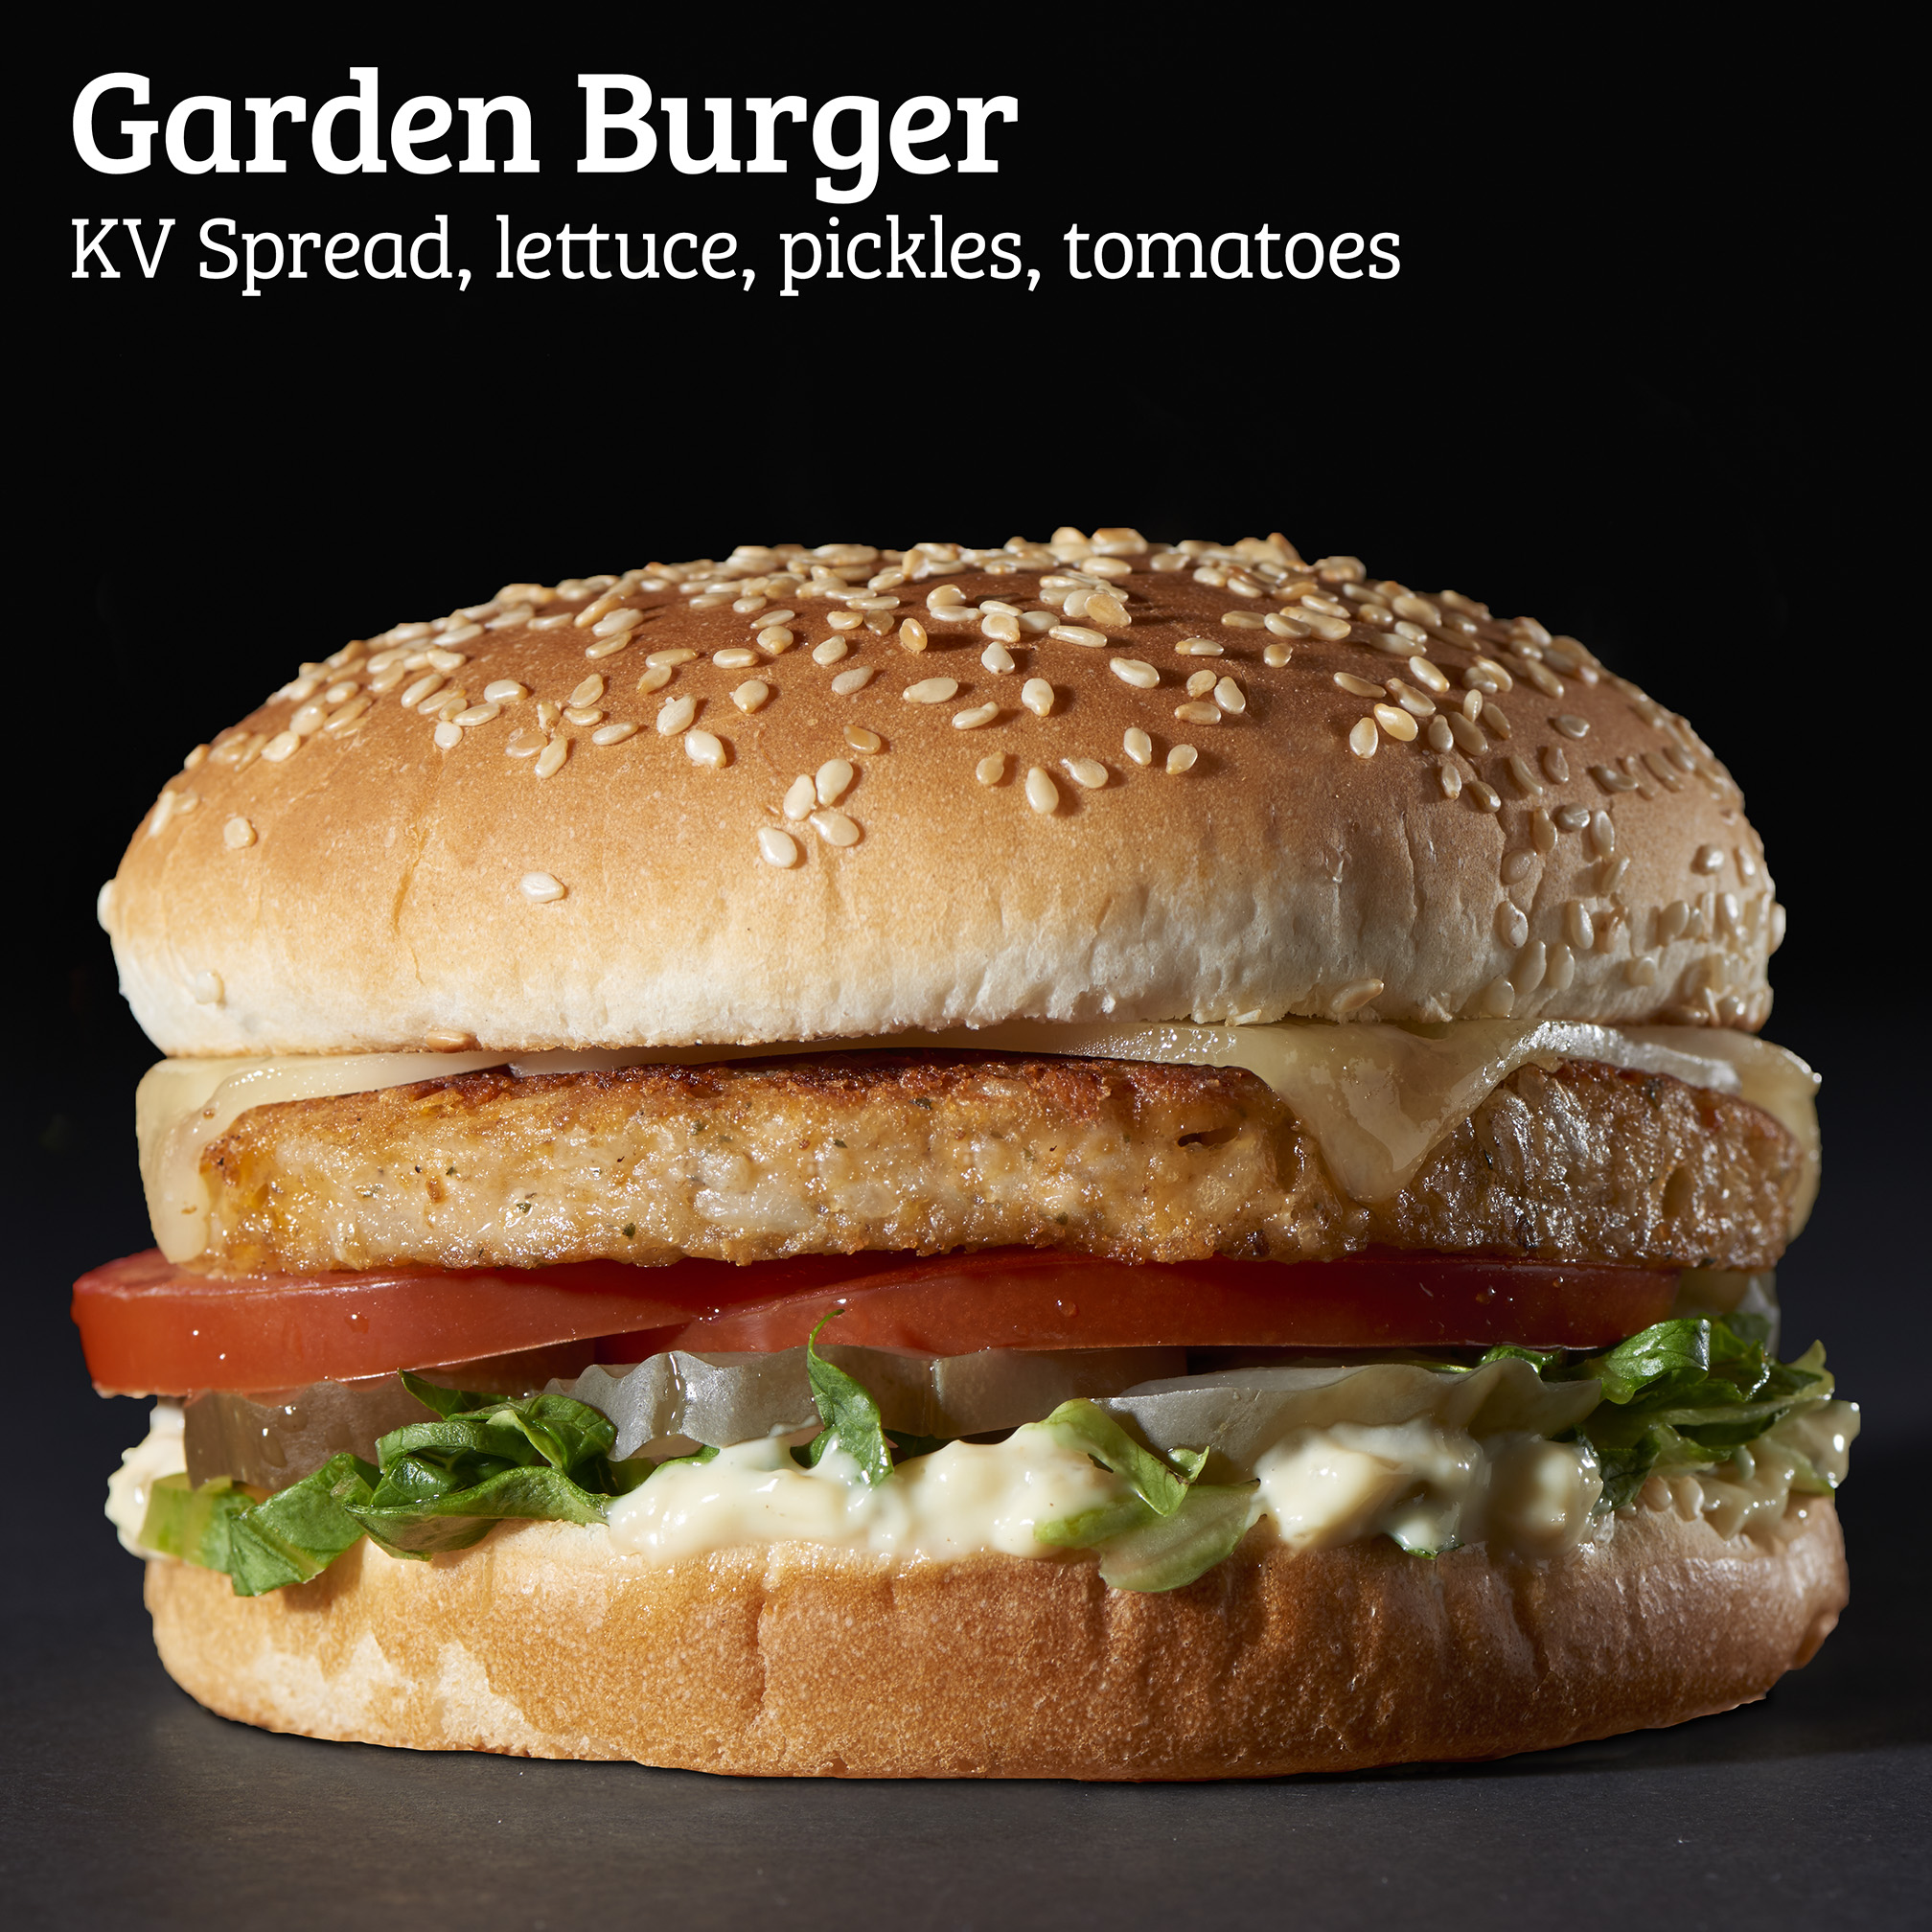 Kidd Valley Garden Burger